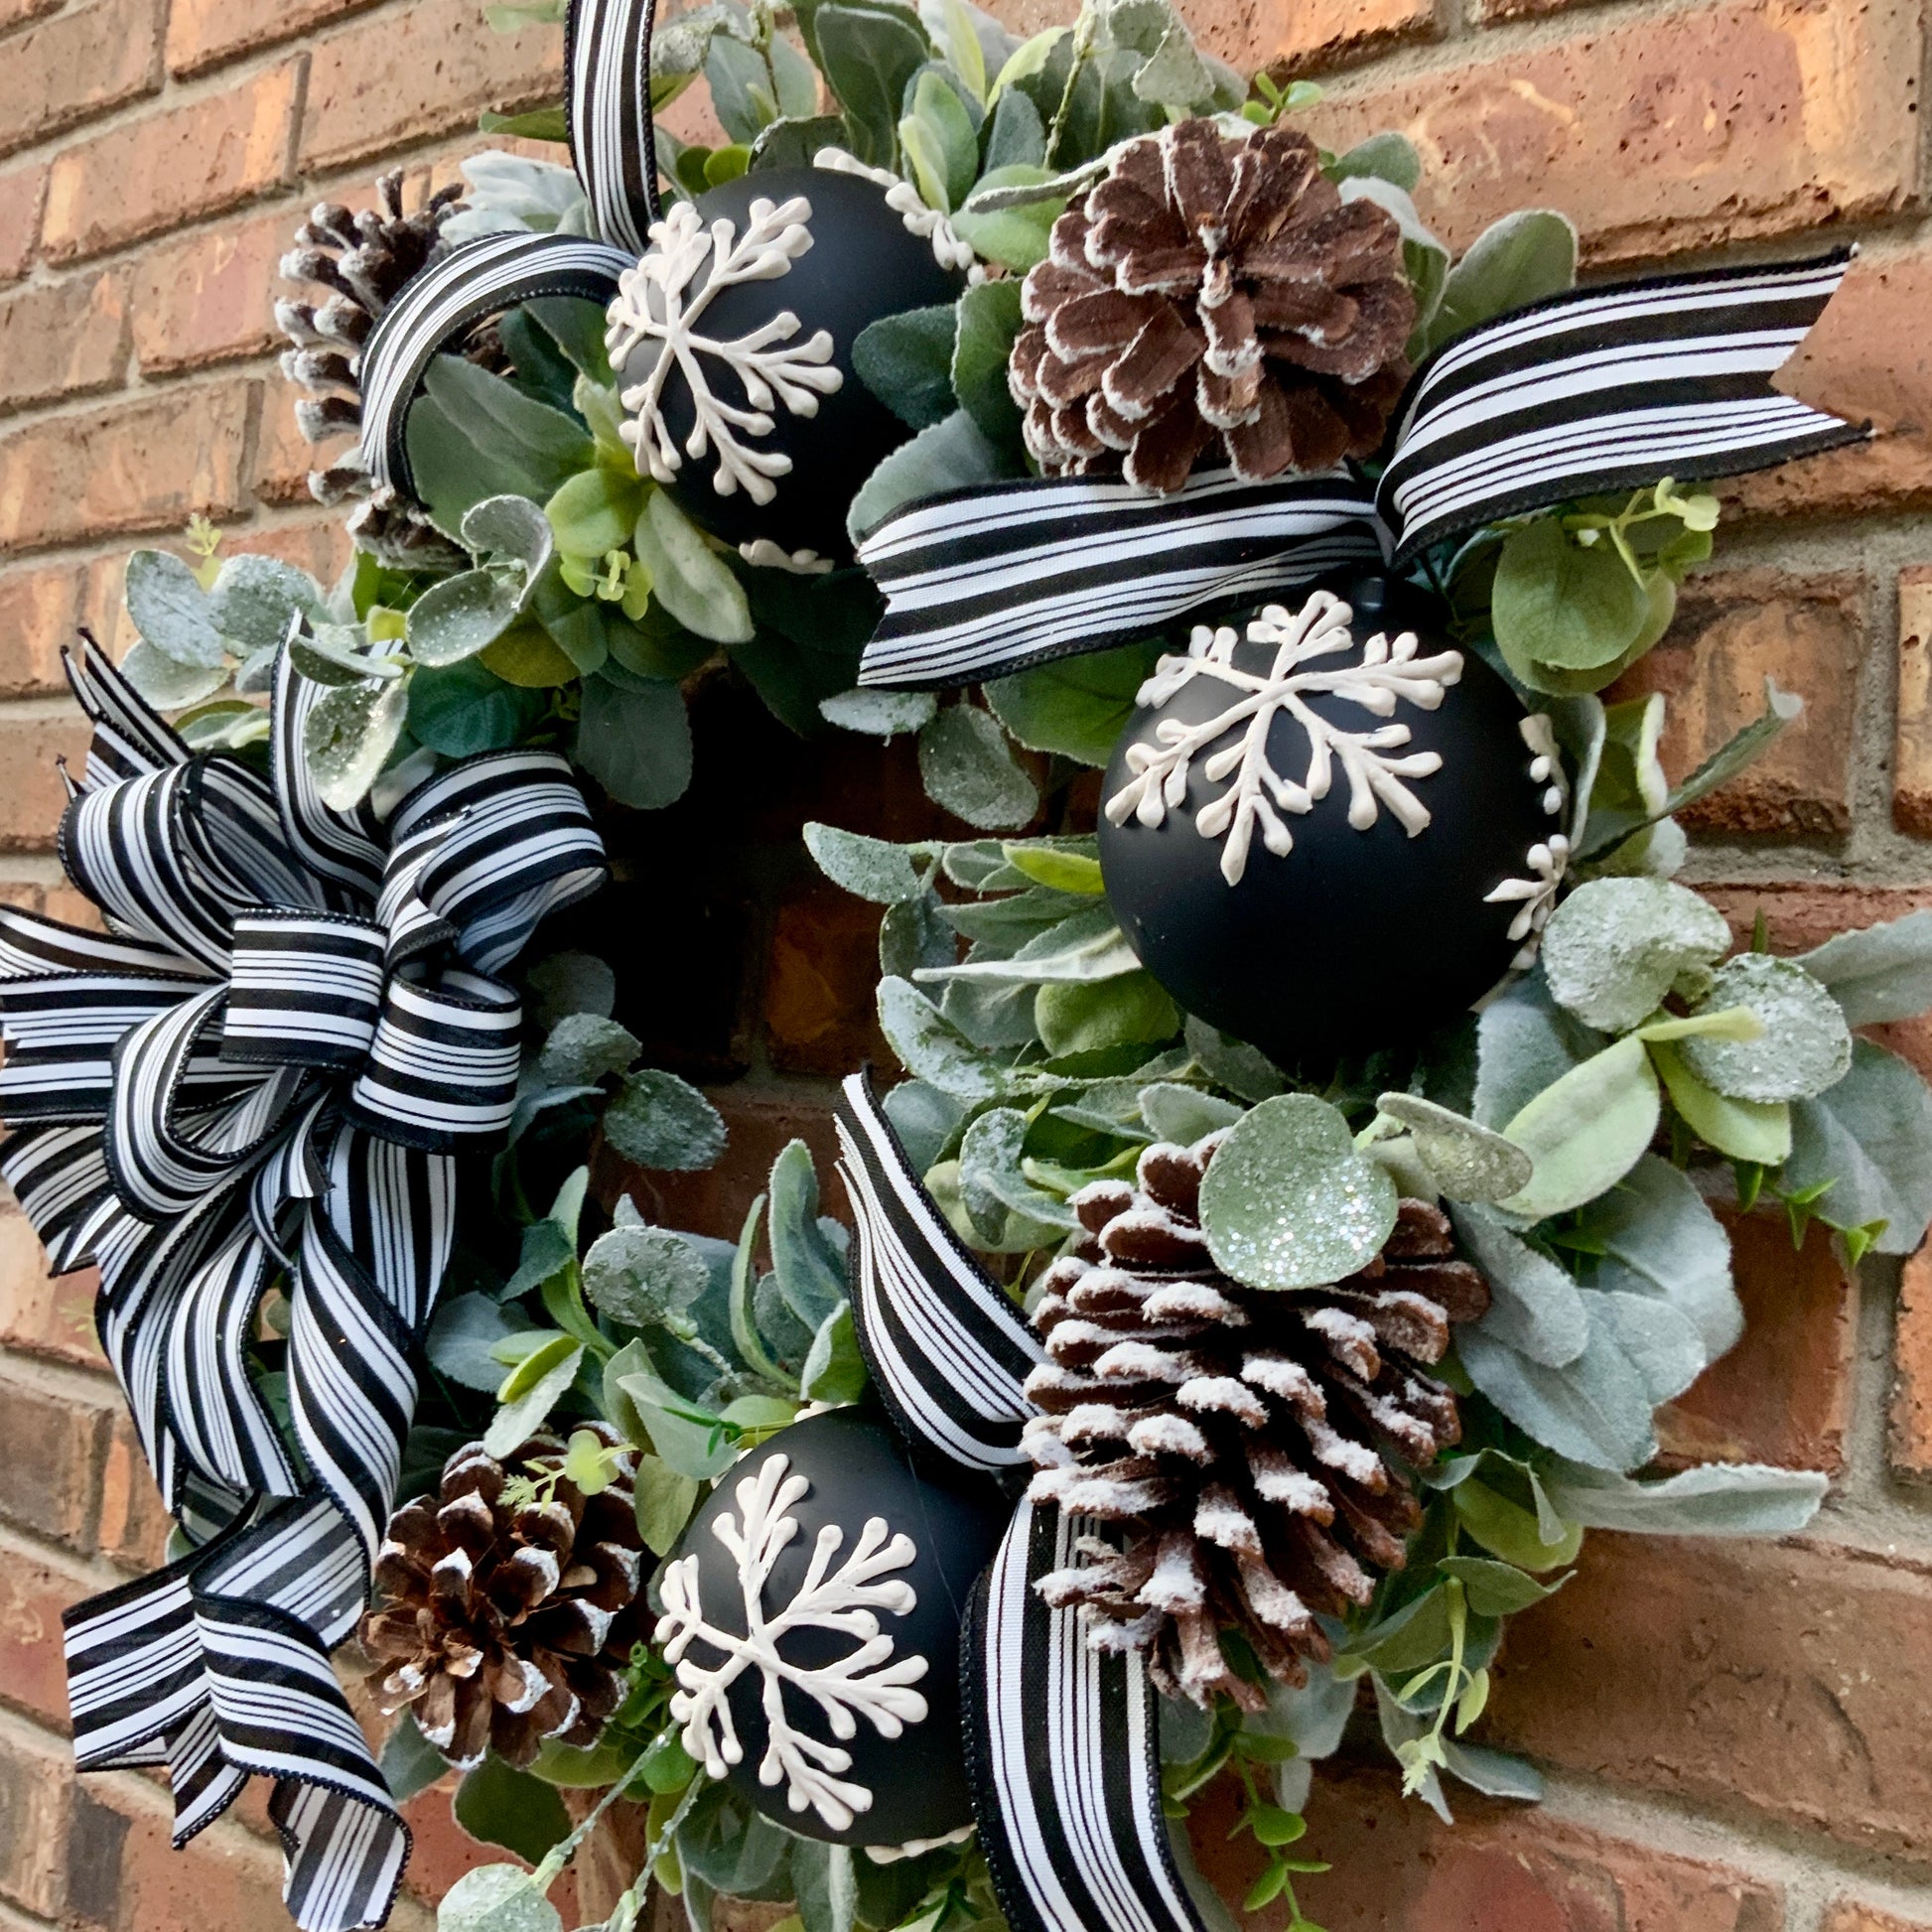 Elegant Burlap and Snowflake Wreath